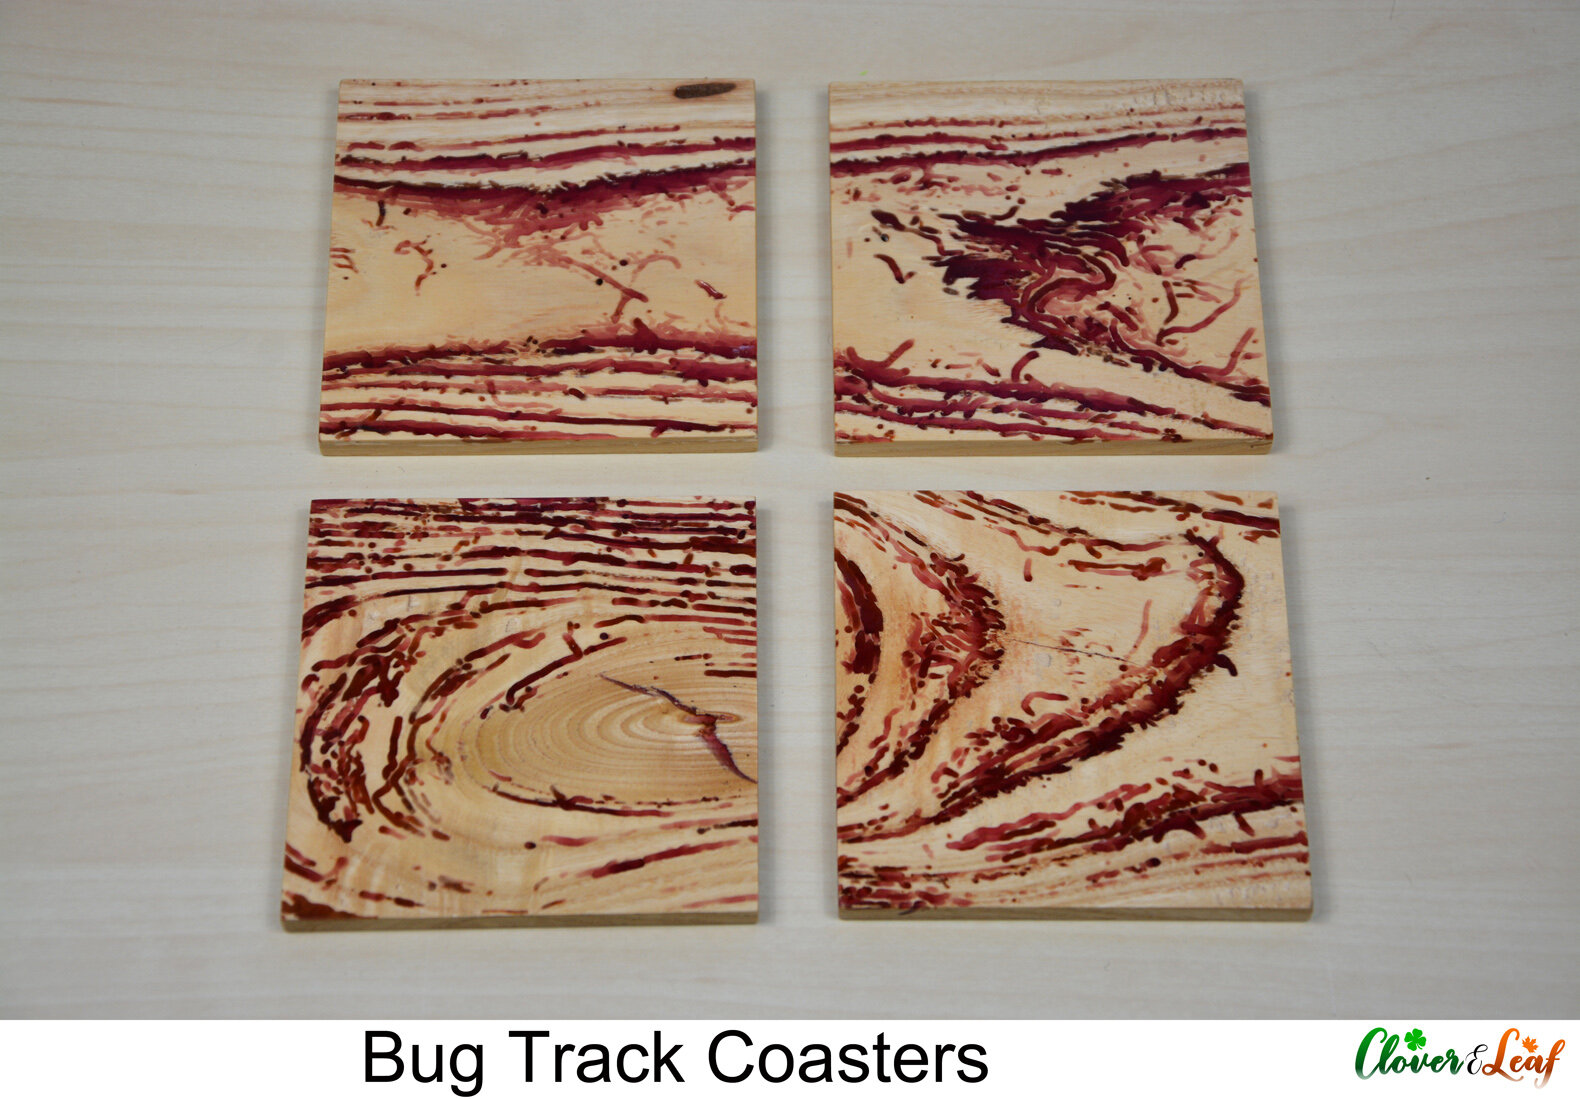 Bug Track Coasters - Coasters Laid Out.jpg